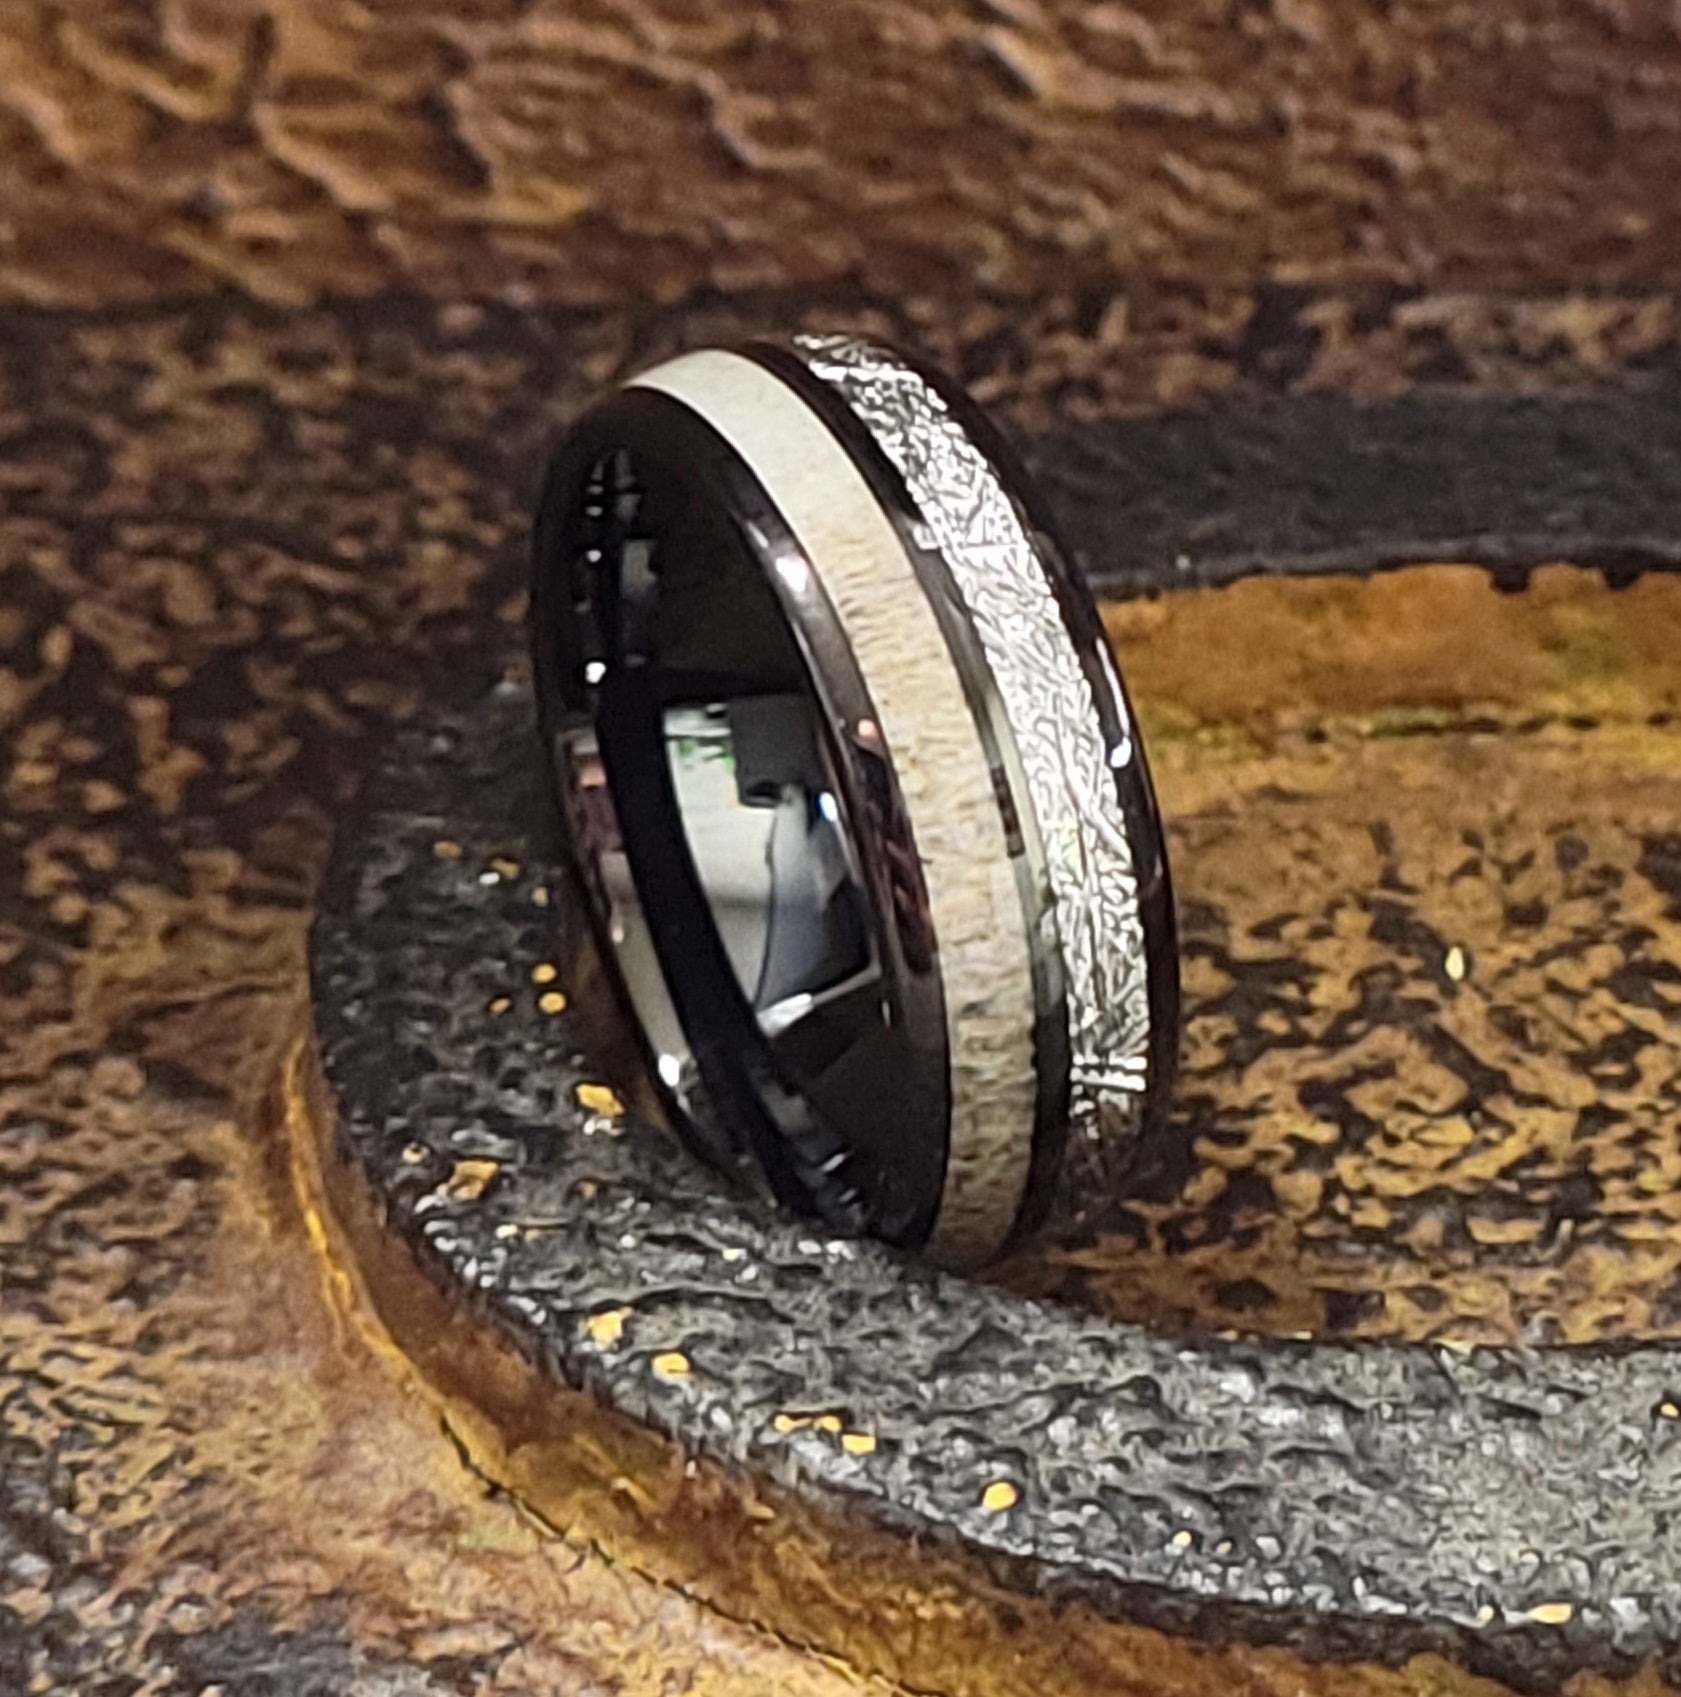 ThinkEngraved wedding Band Personalized Men's Meteor and Antler Black Tungsten Wedding Ring - Handwriting Ring